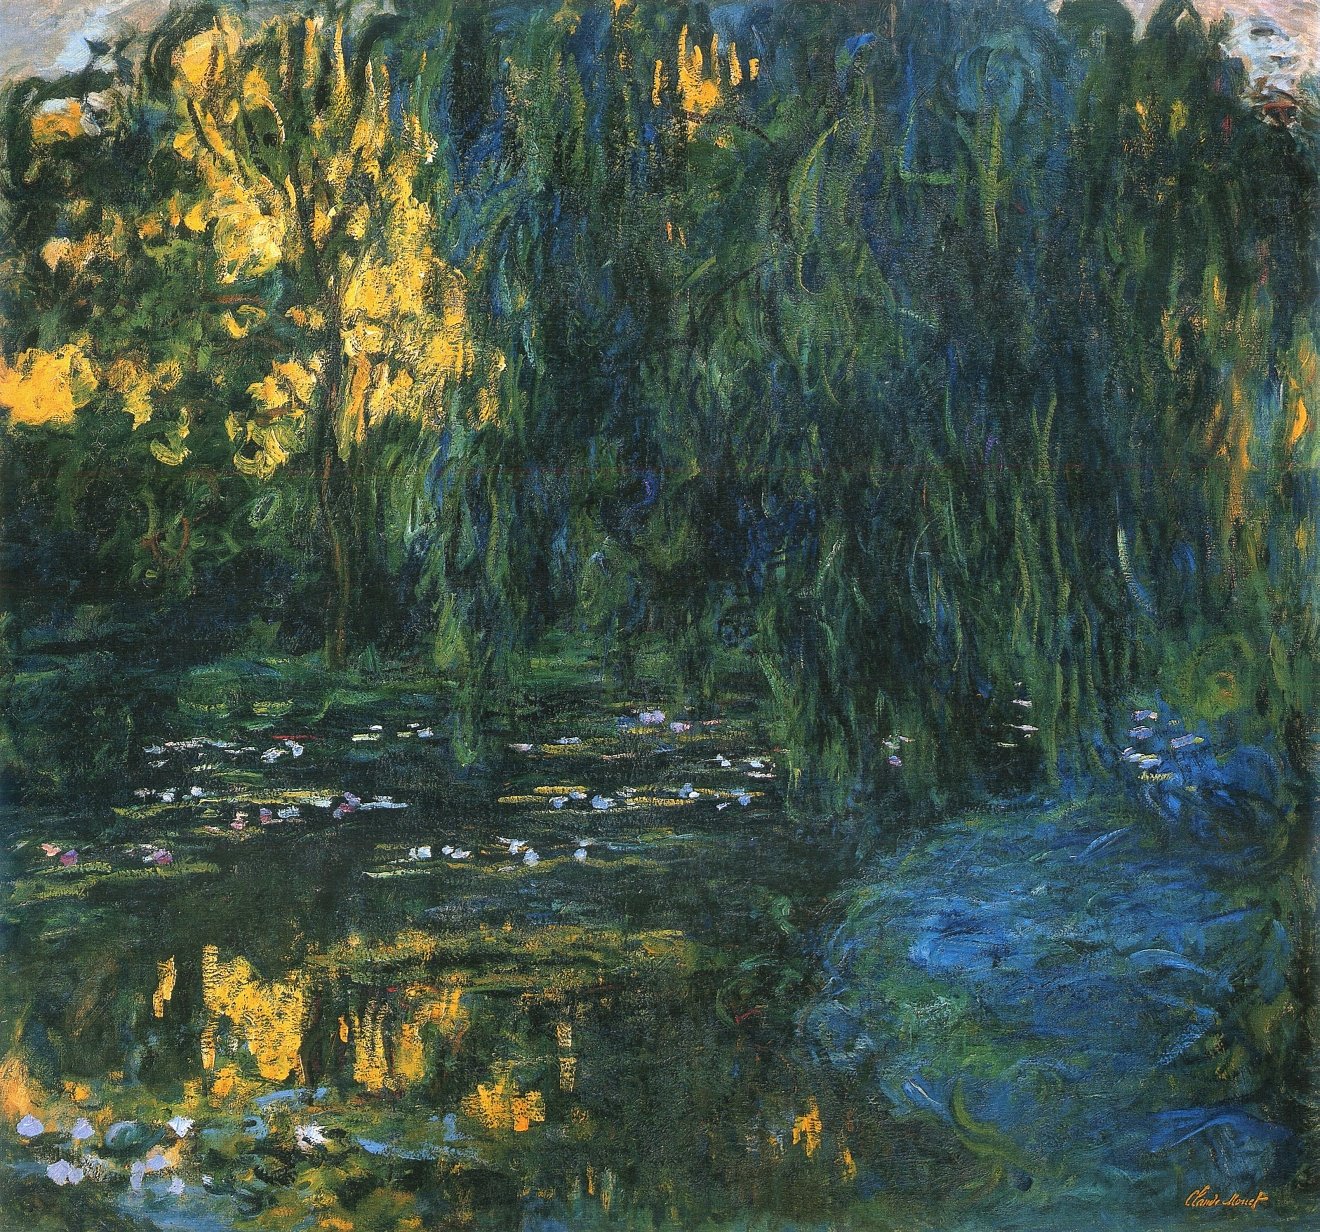 Claude+Monet-1840-1926 (952).jpg